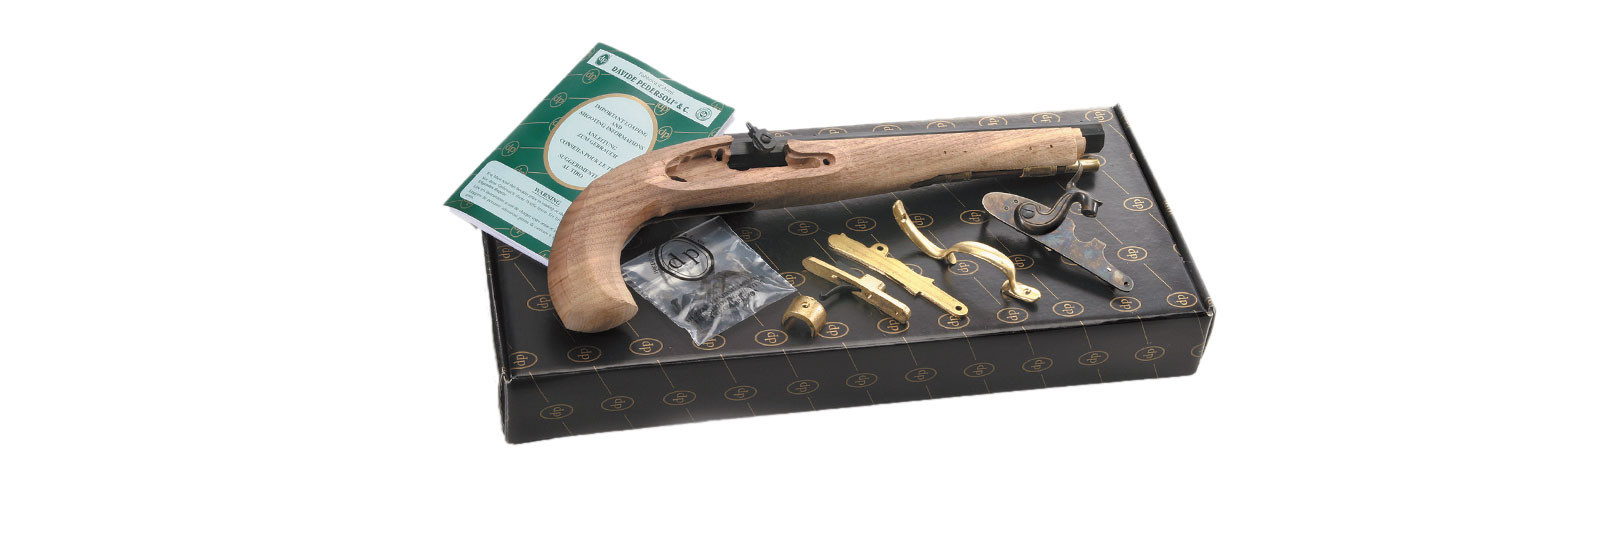 Kentucky percussion model pistol kit